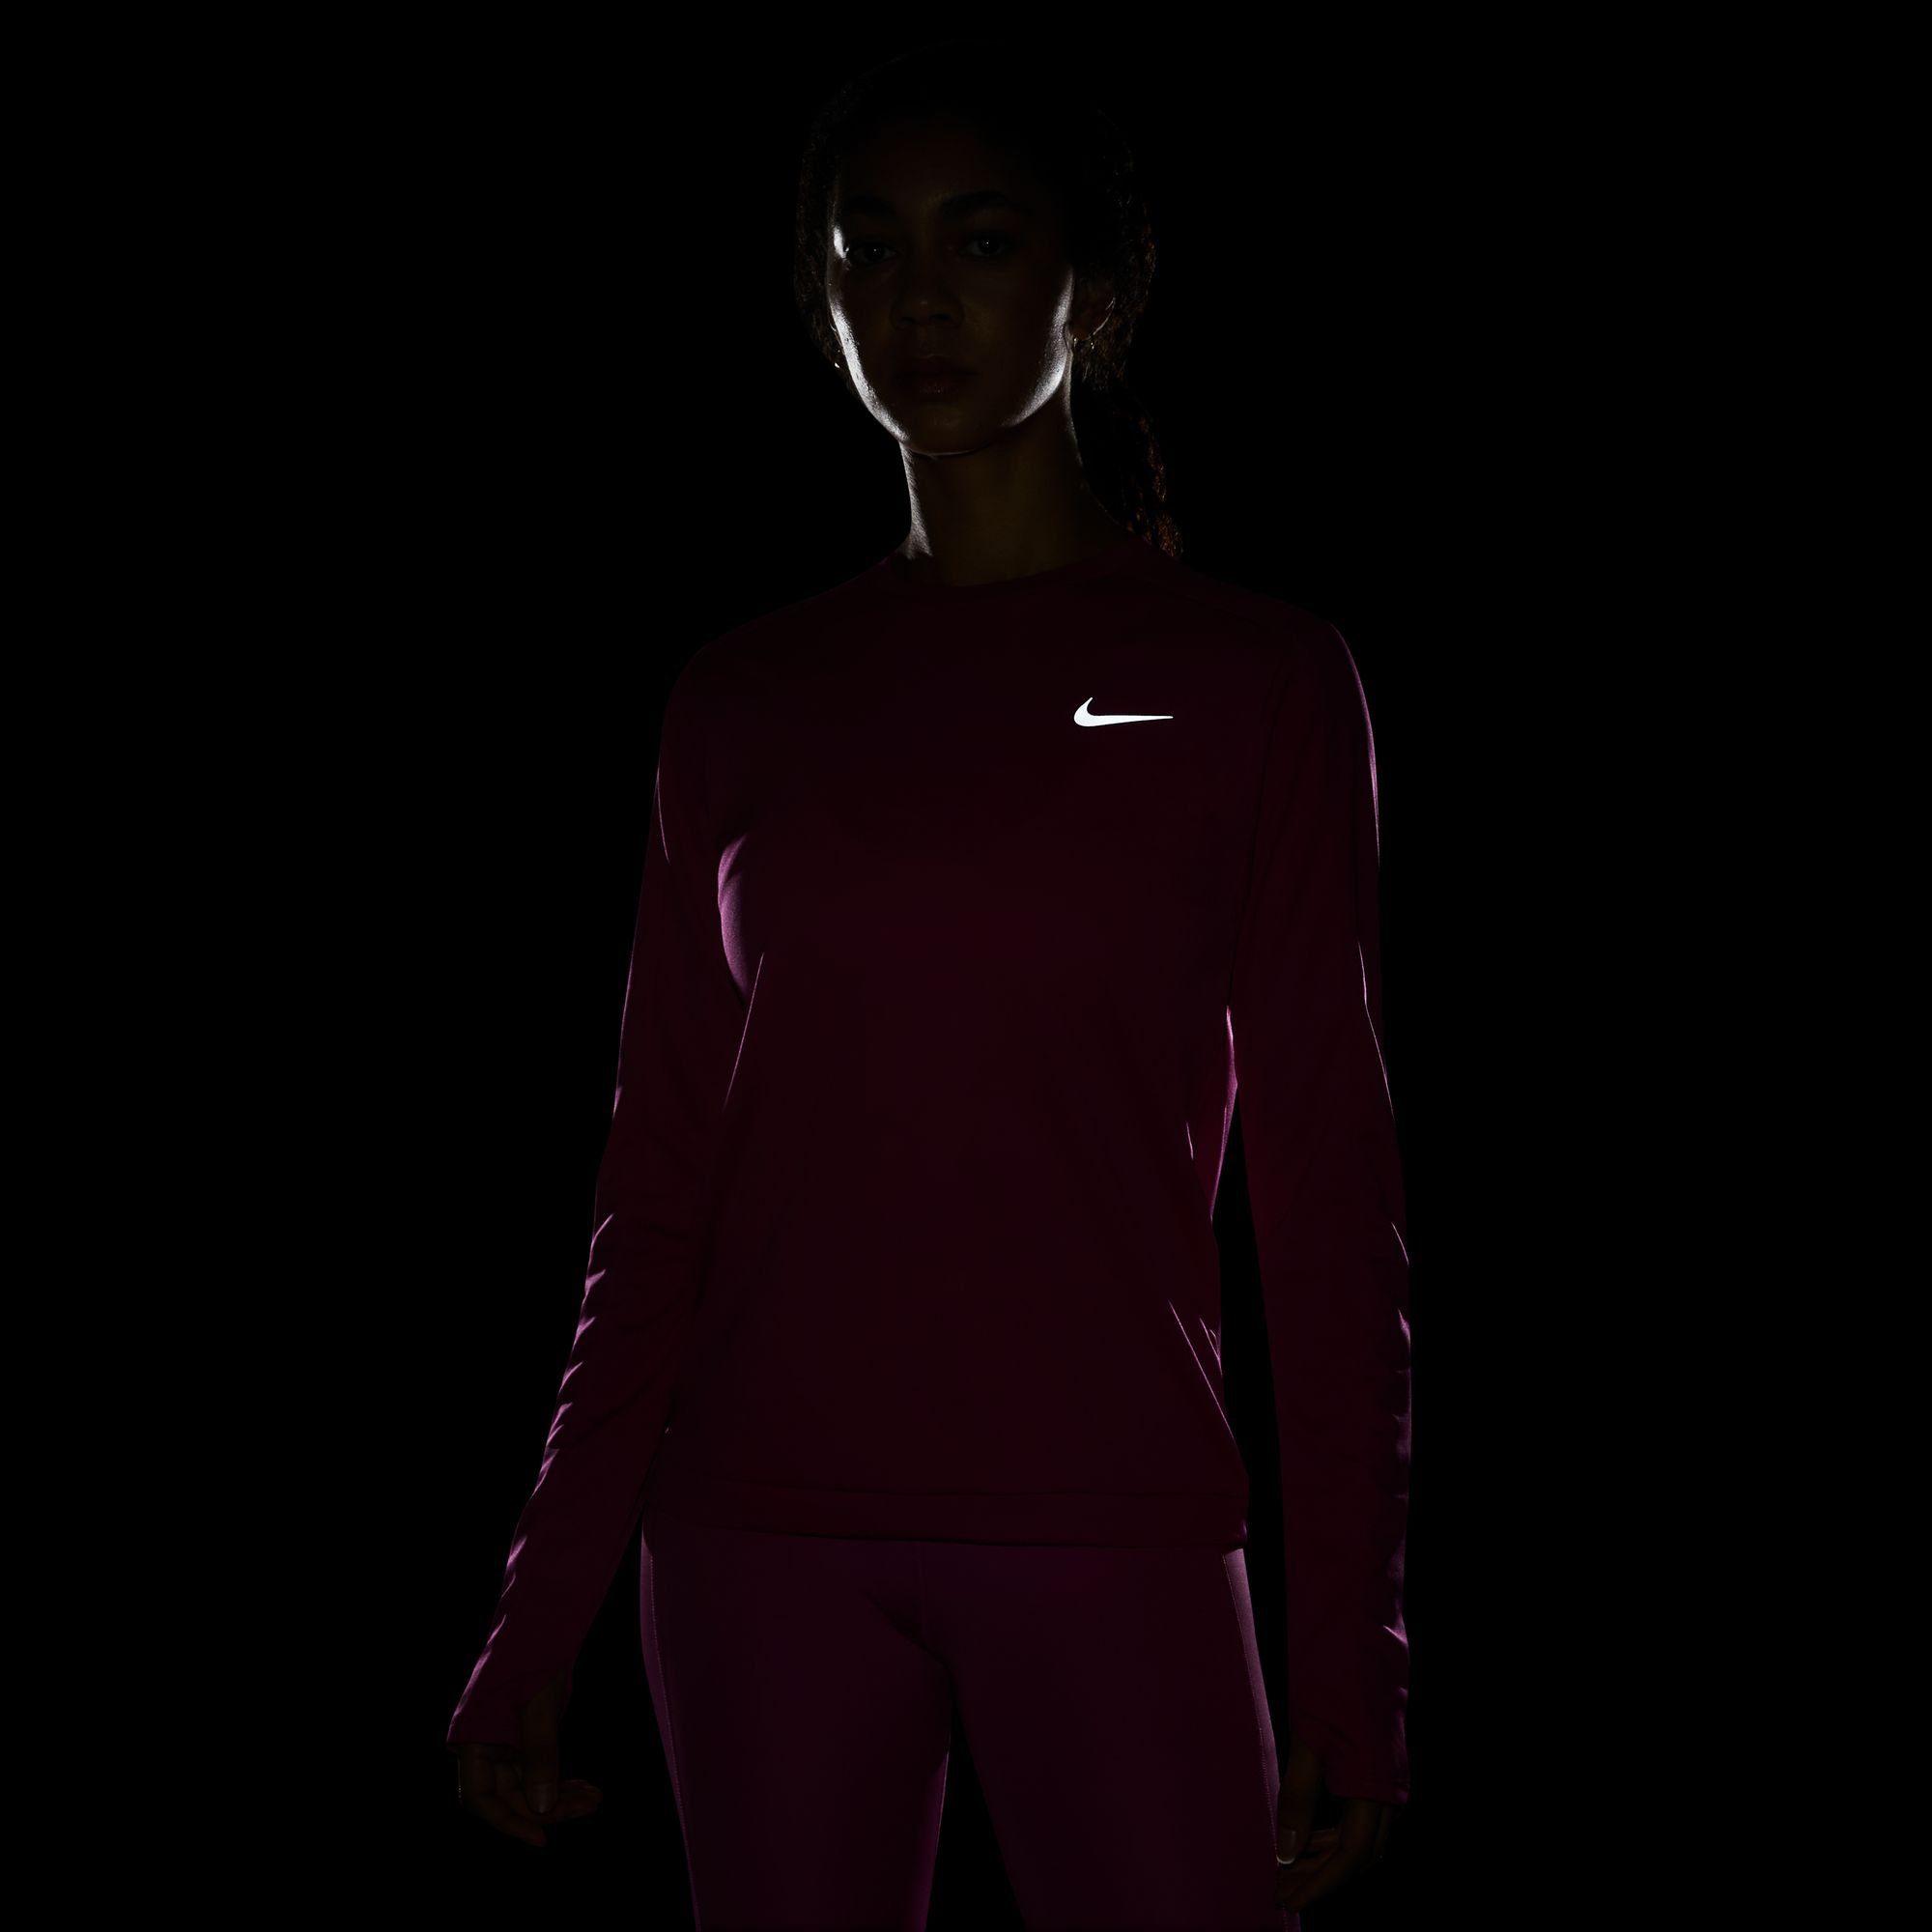 WOMEN'S Laufshirt Nike DRI-FIT TOP SILV FIREBERRY/REFLECTIVE RUNNING CREW-NECK